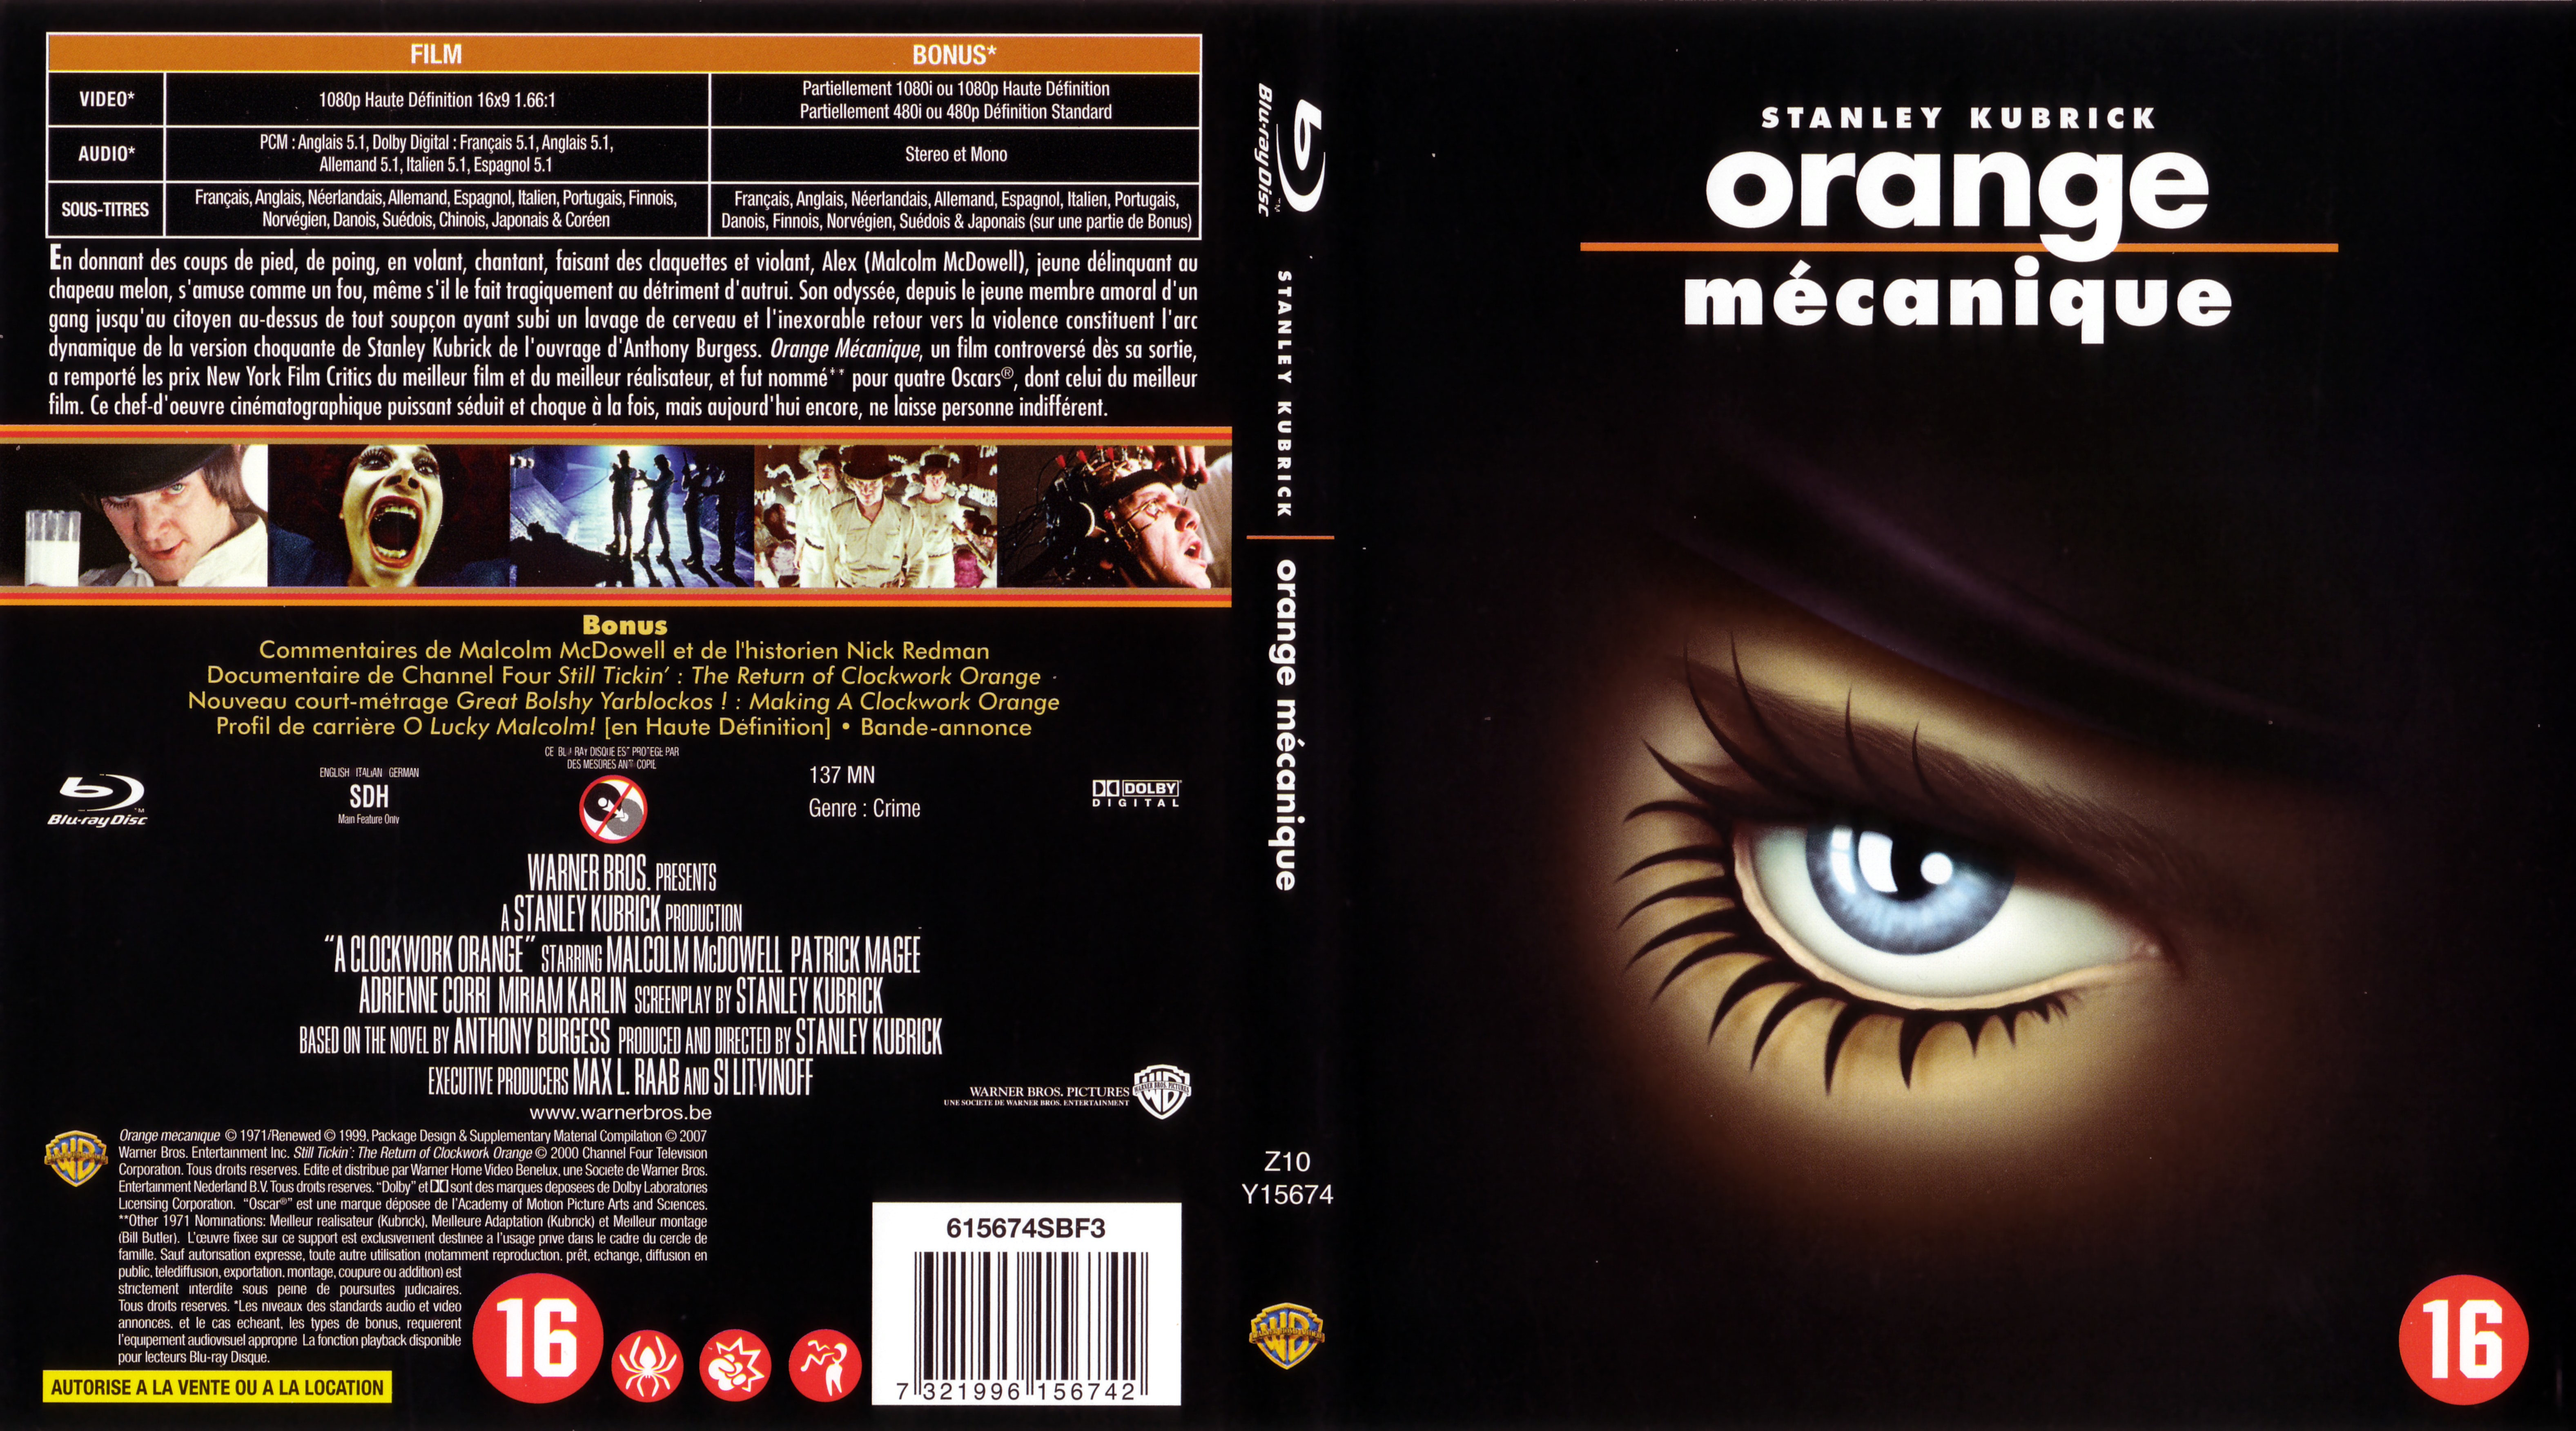 Jaquette DVD Orange mcanique (BLU-RAY) v3